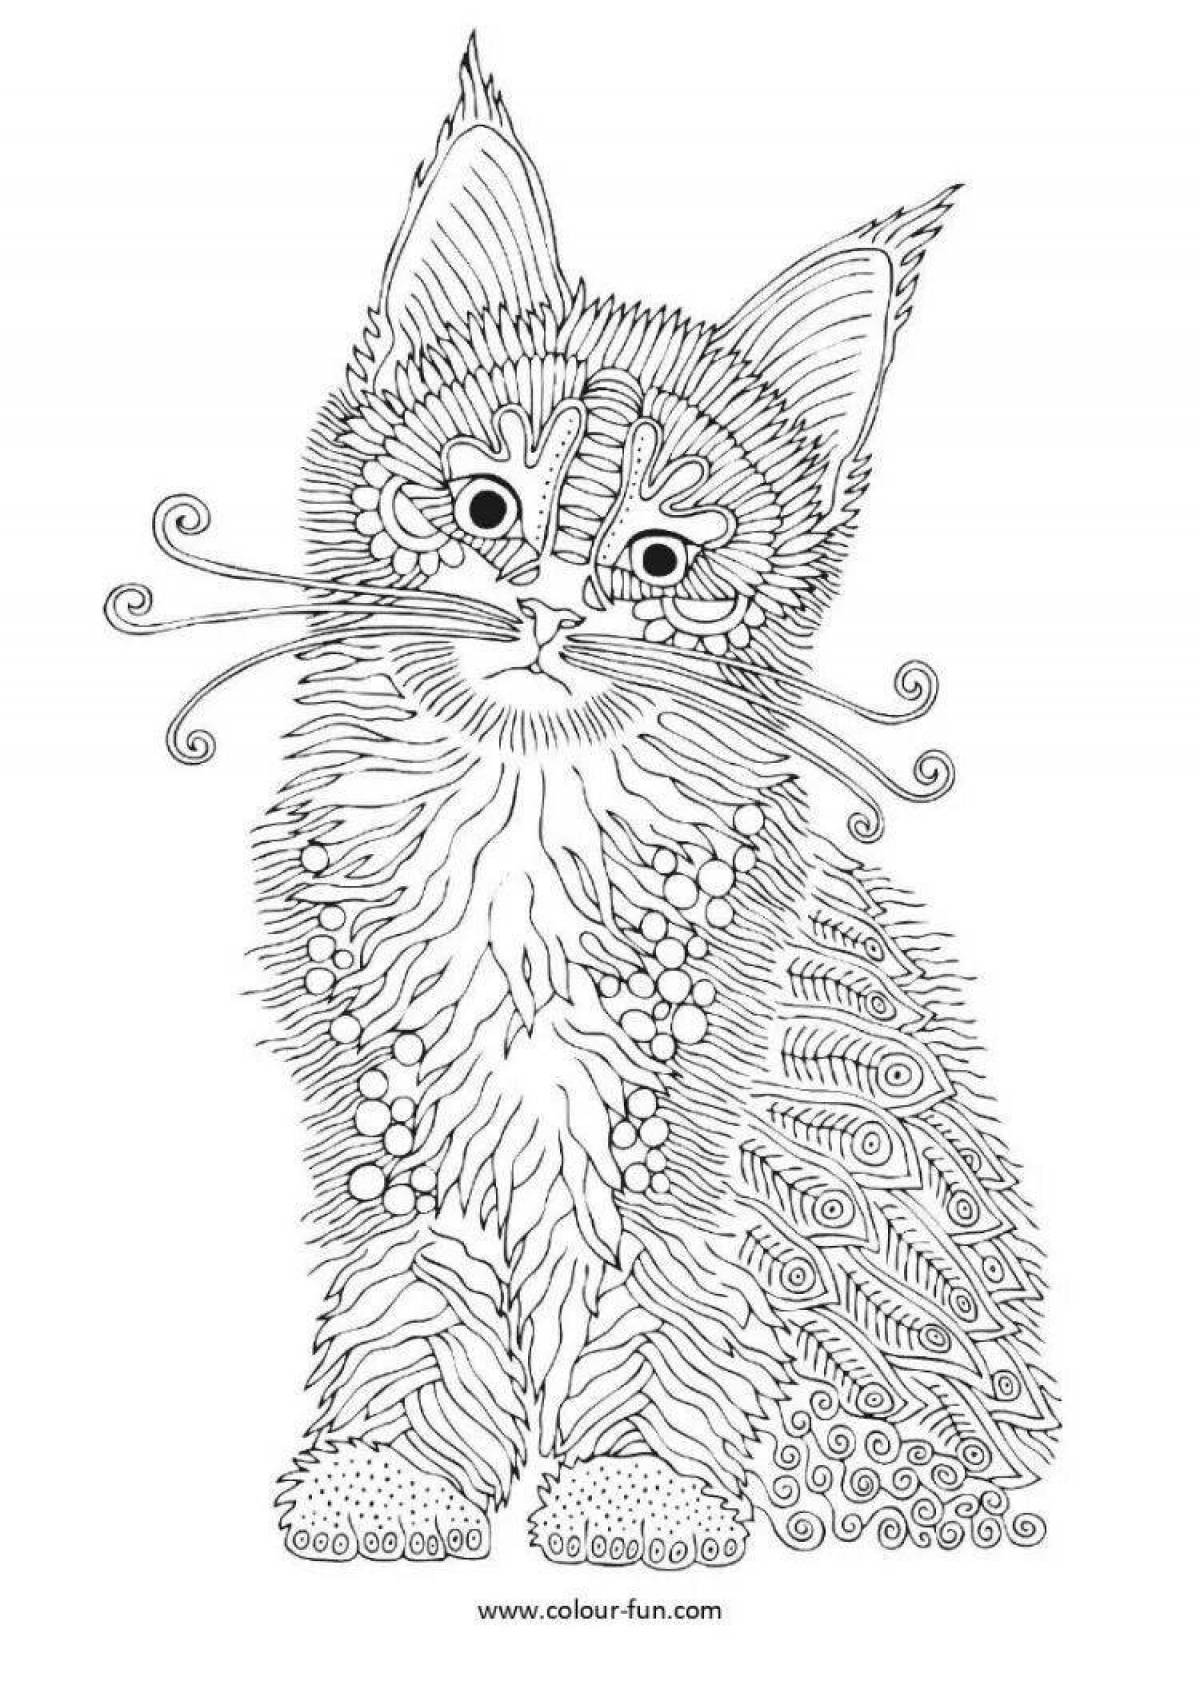 Naughty anti-stress kitten coloring book